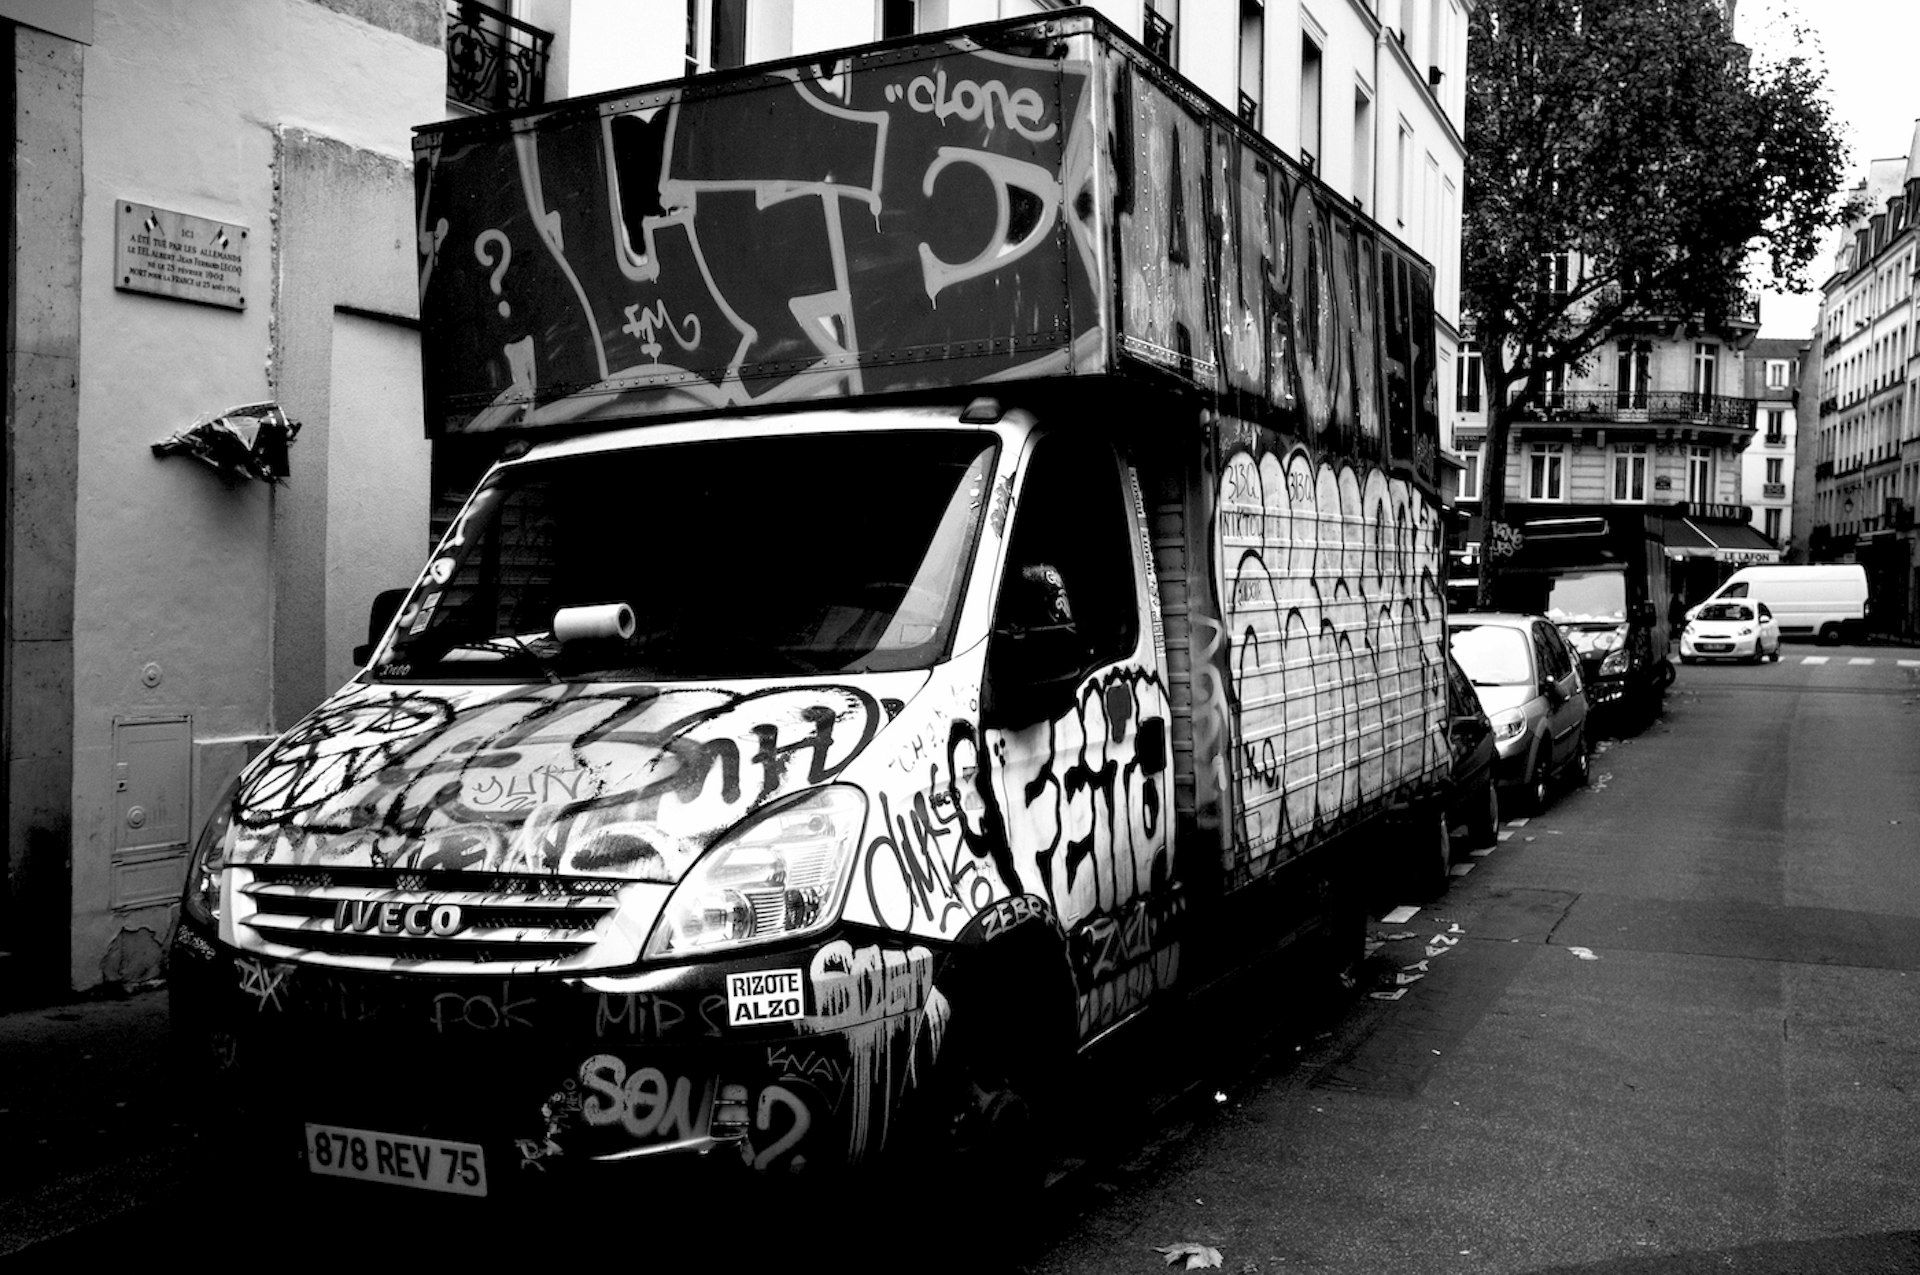 161126-marcvallee-Graffiti-Trucks-26.11.16.0066